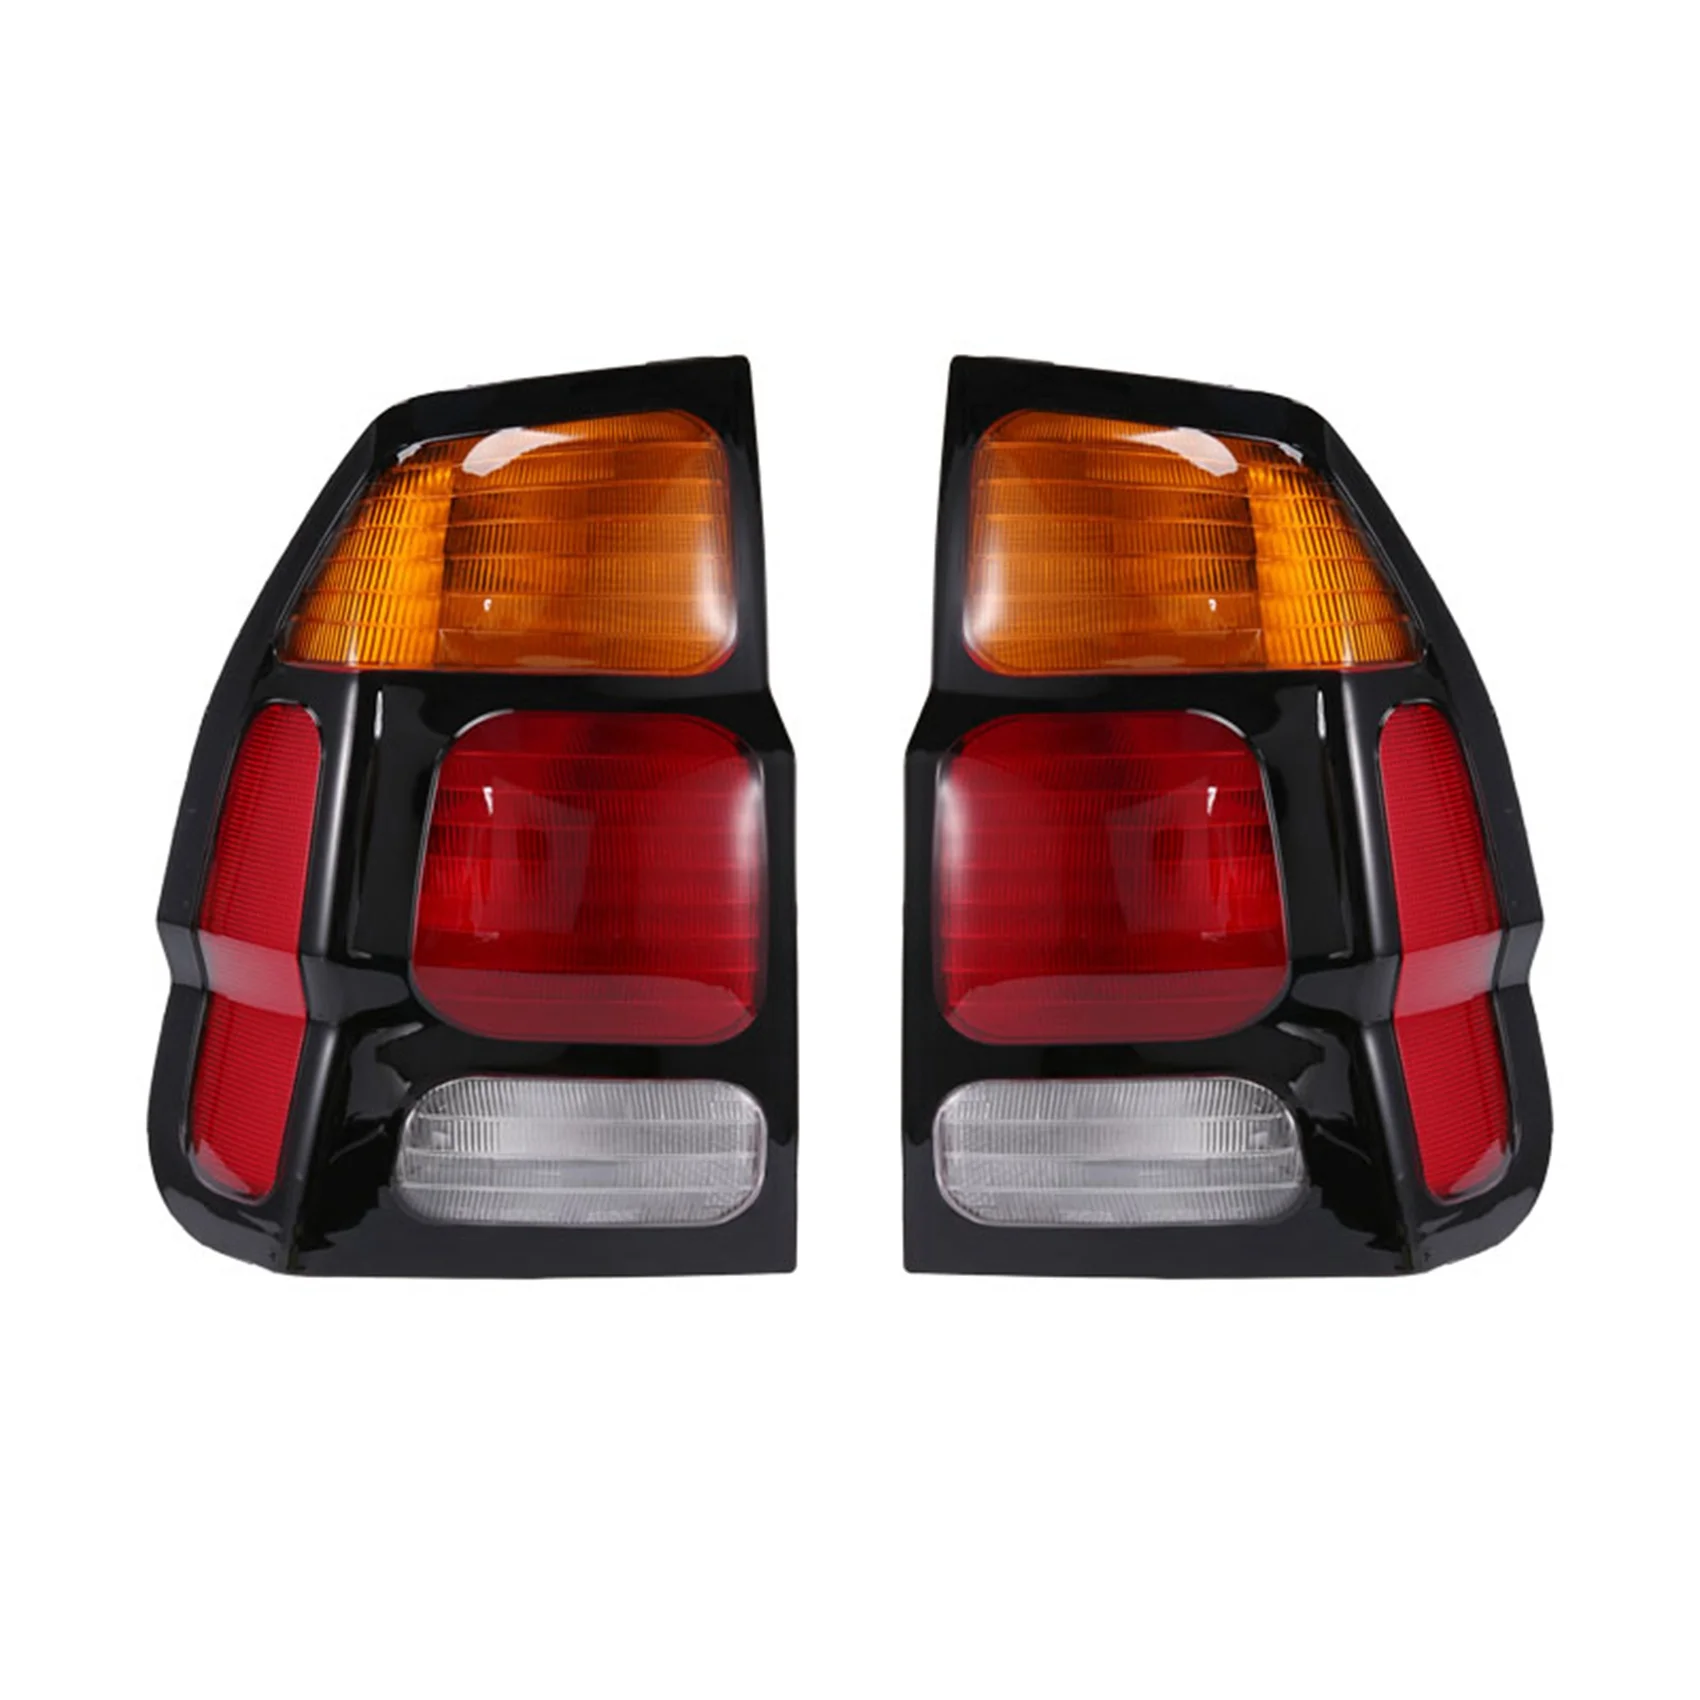 

Car Rear Tail Brake Lights for Mitsubishi Pajero MONTERO Sport 1999-2008 Signal Warning Lamp Taillight Assembly